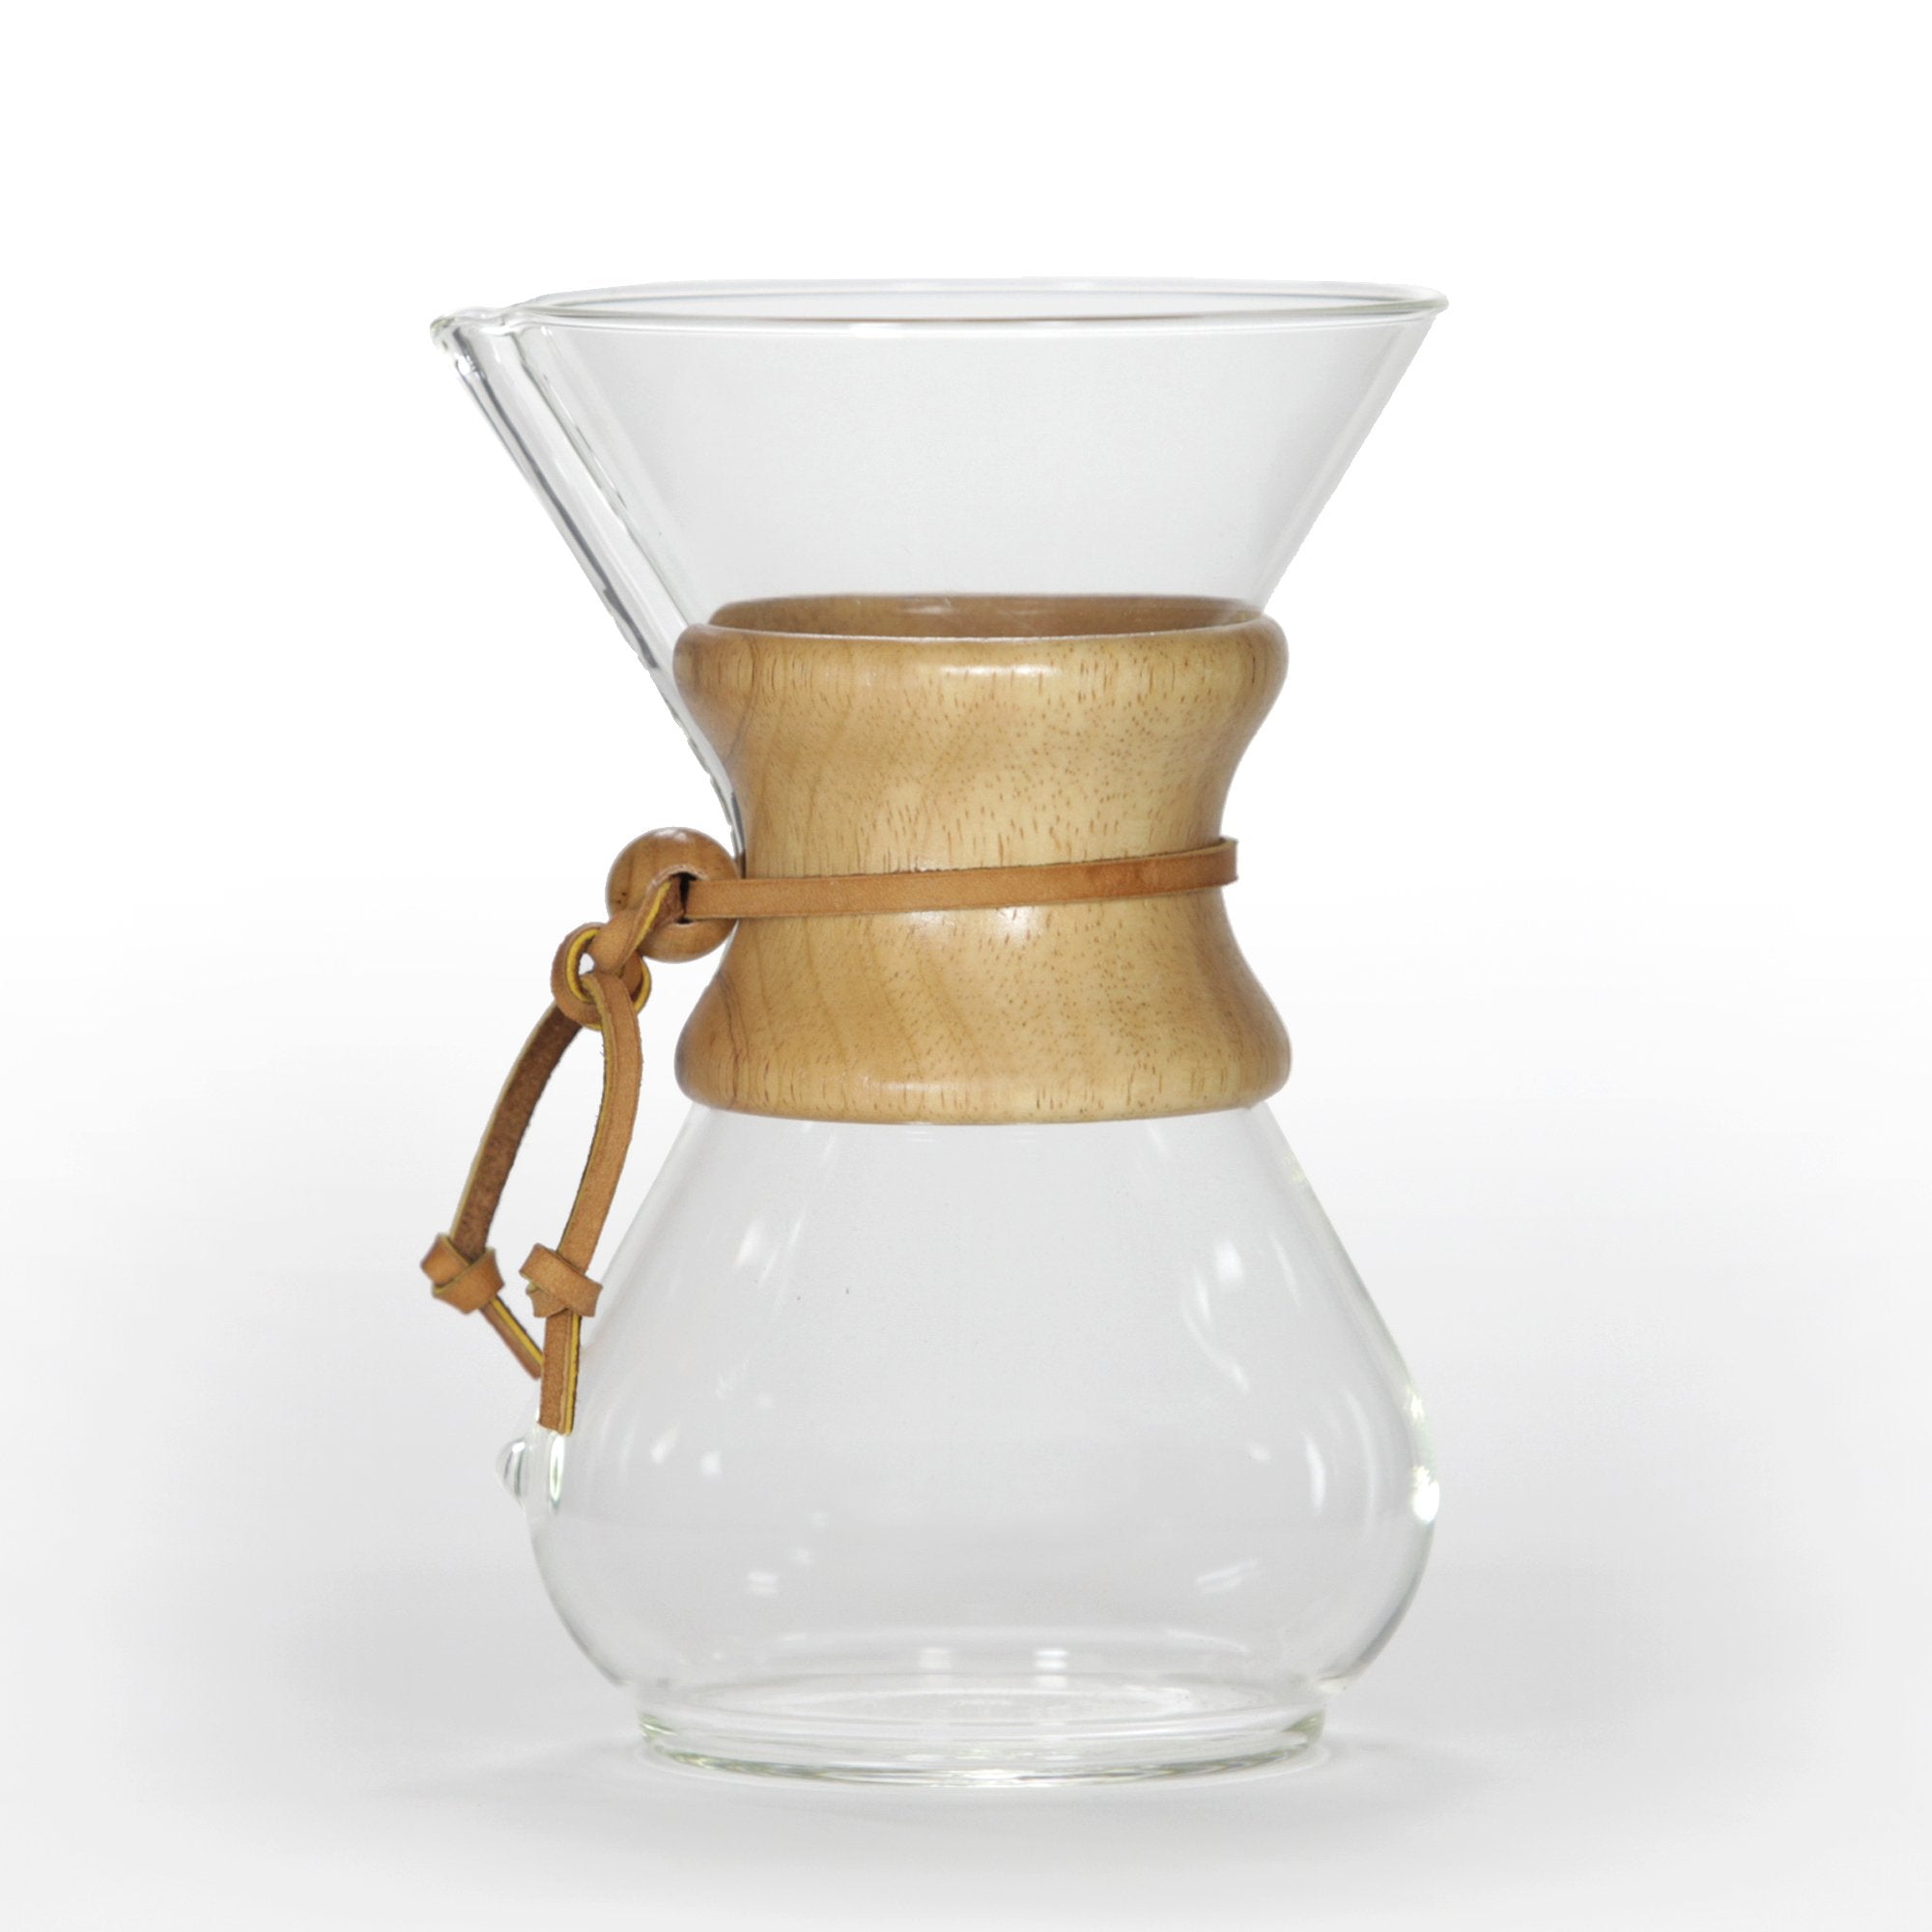 CHEMEX COFFEE MAKER 8 CUP – Lofty Coffee